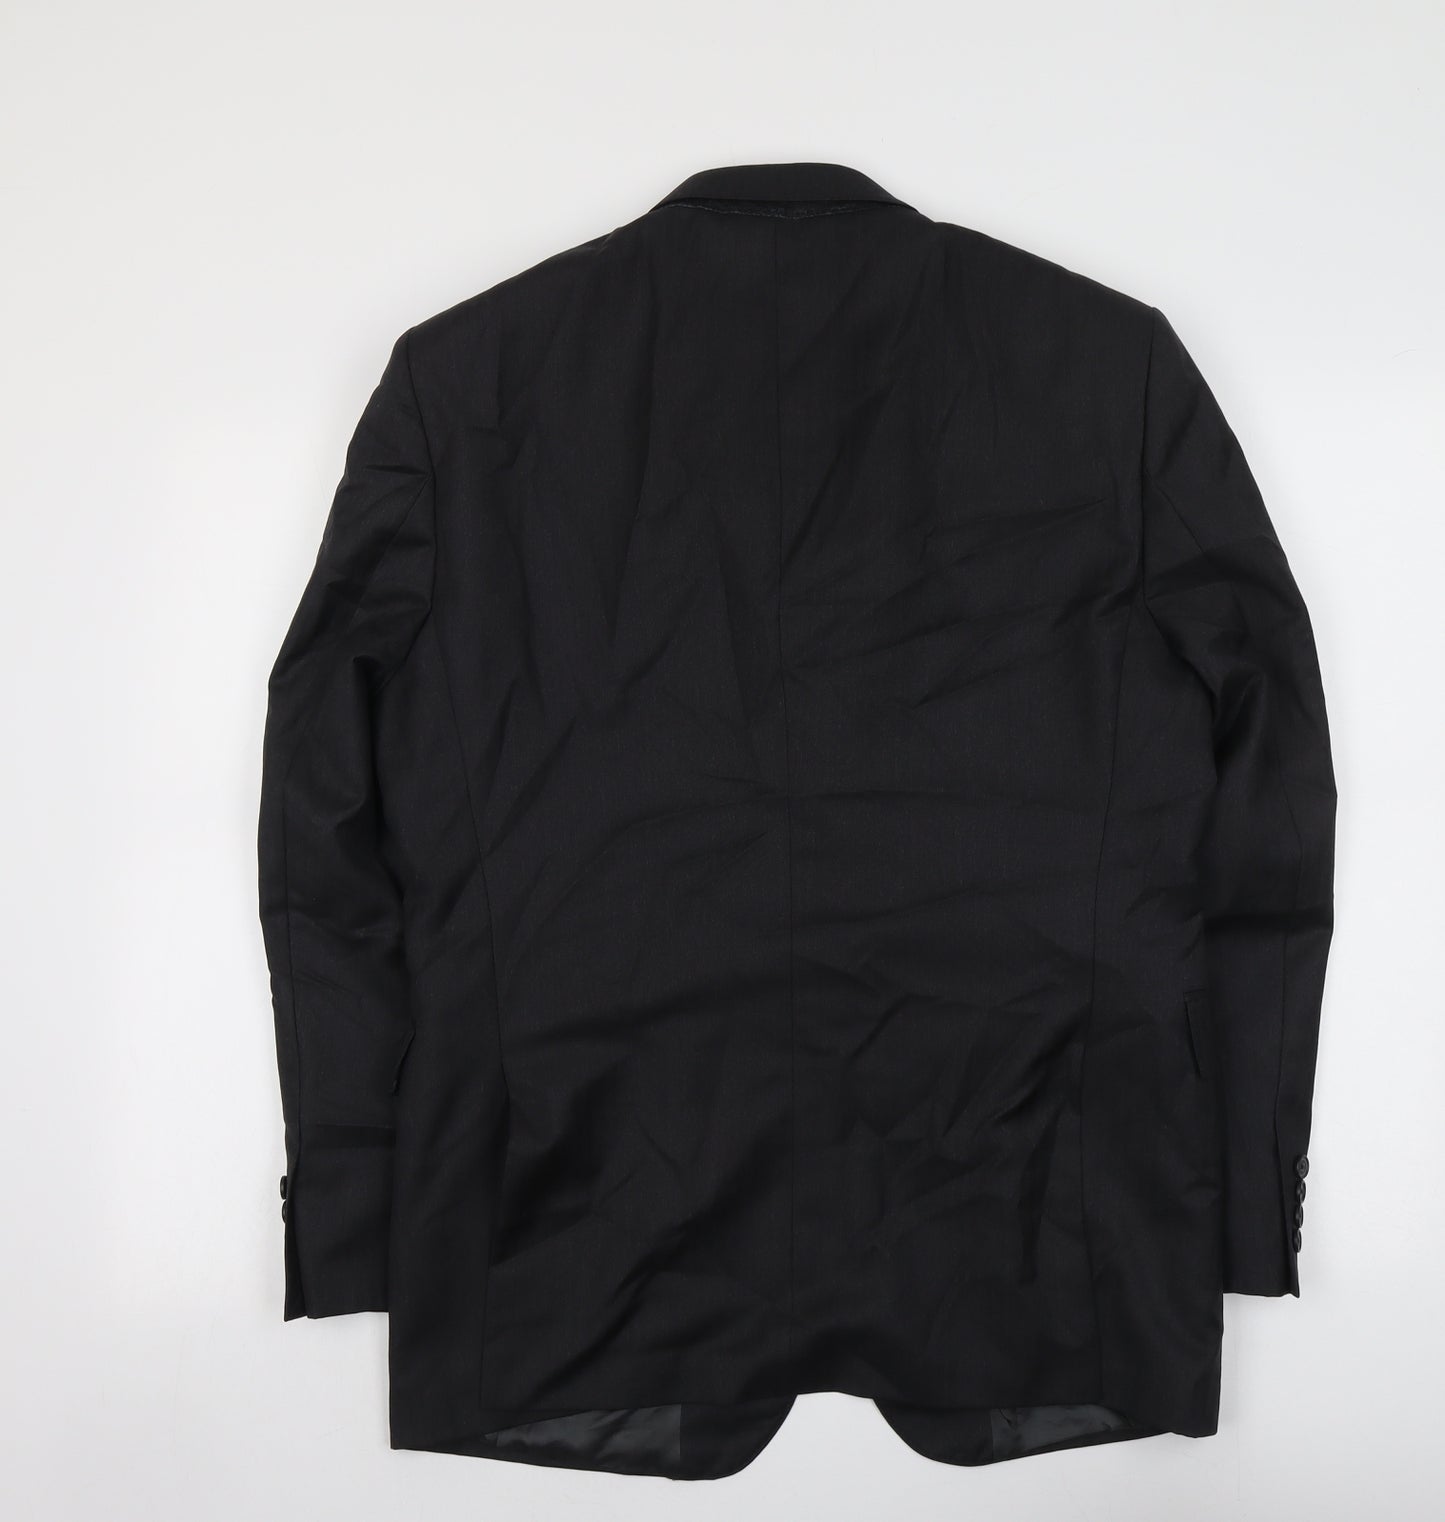 Jaeger Mens Grey Wool Jacket Suit Jacket Size M Regular